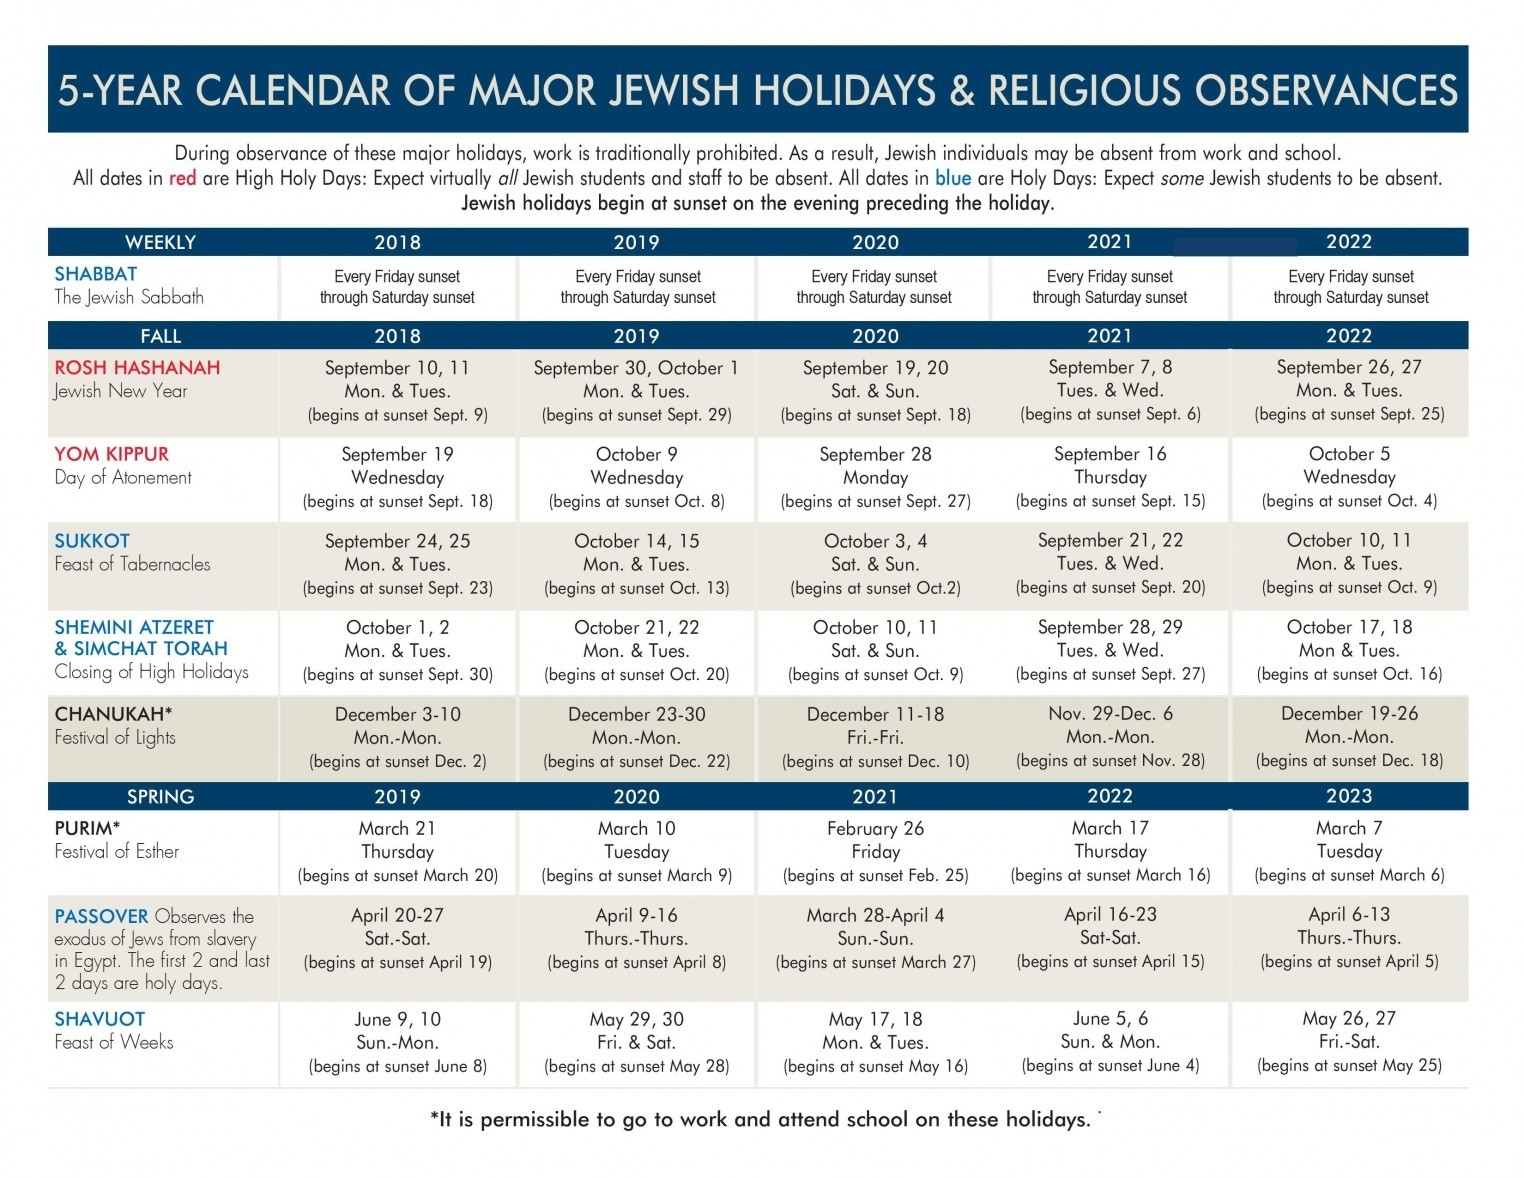 5-Year Jewish Holiday Calendar | Jewish Federation Of-Jewish Calendar For Holidays 2020